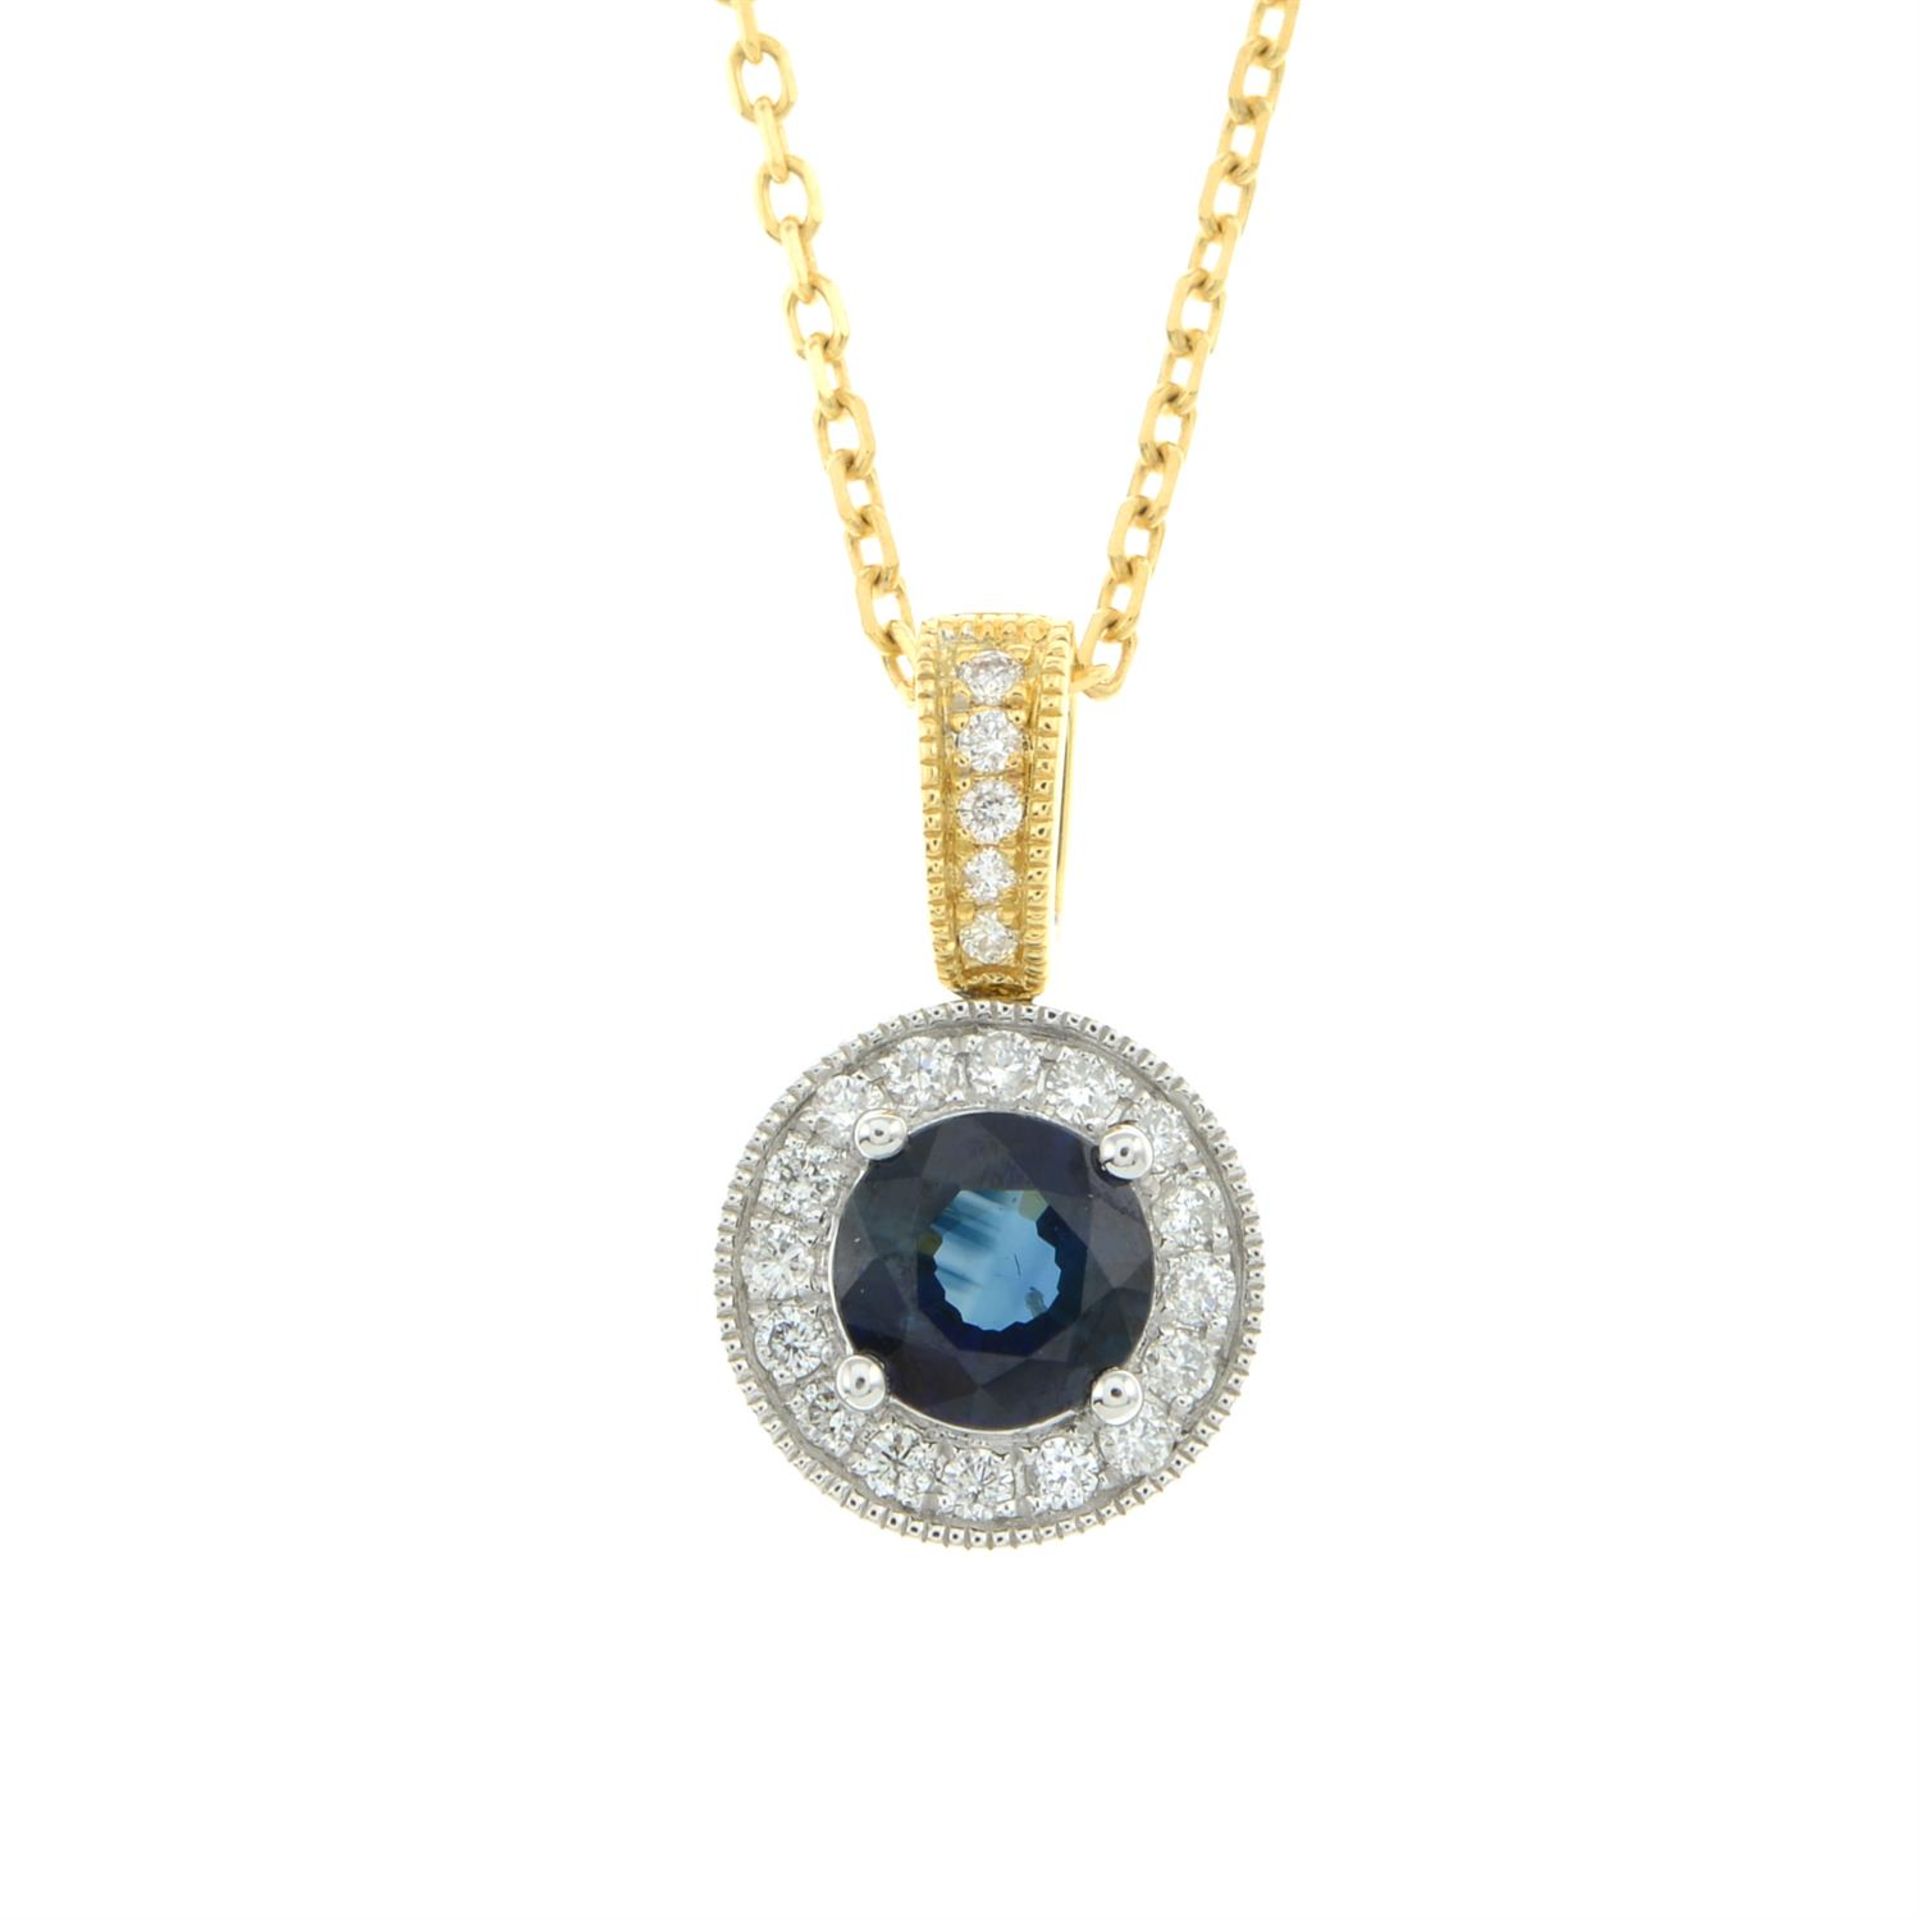 18ct gold sapphire & diamond pendant, with chain